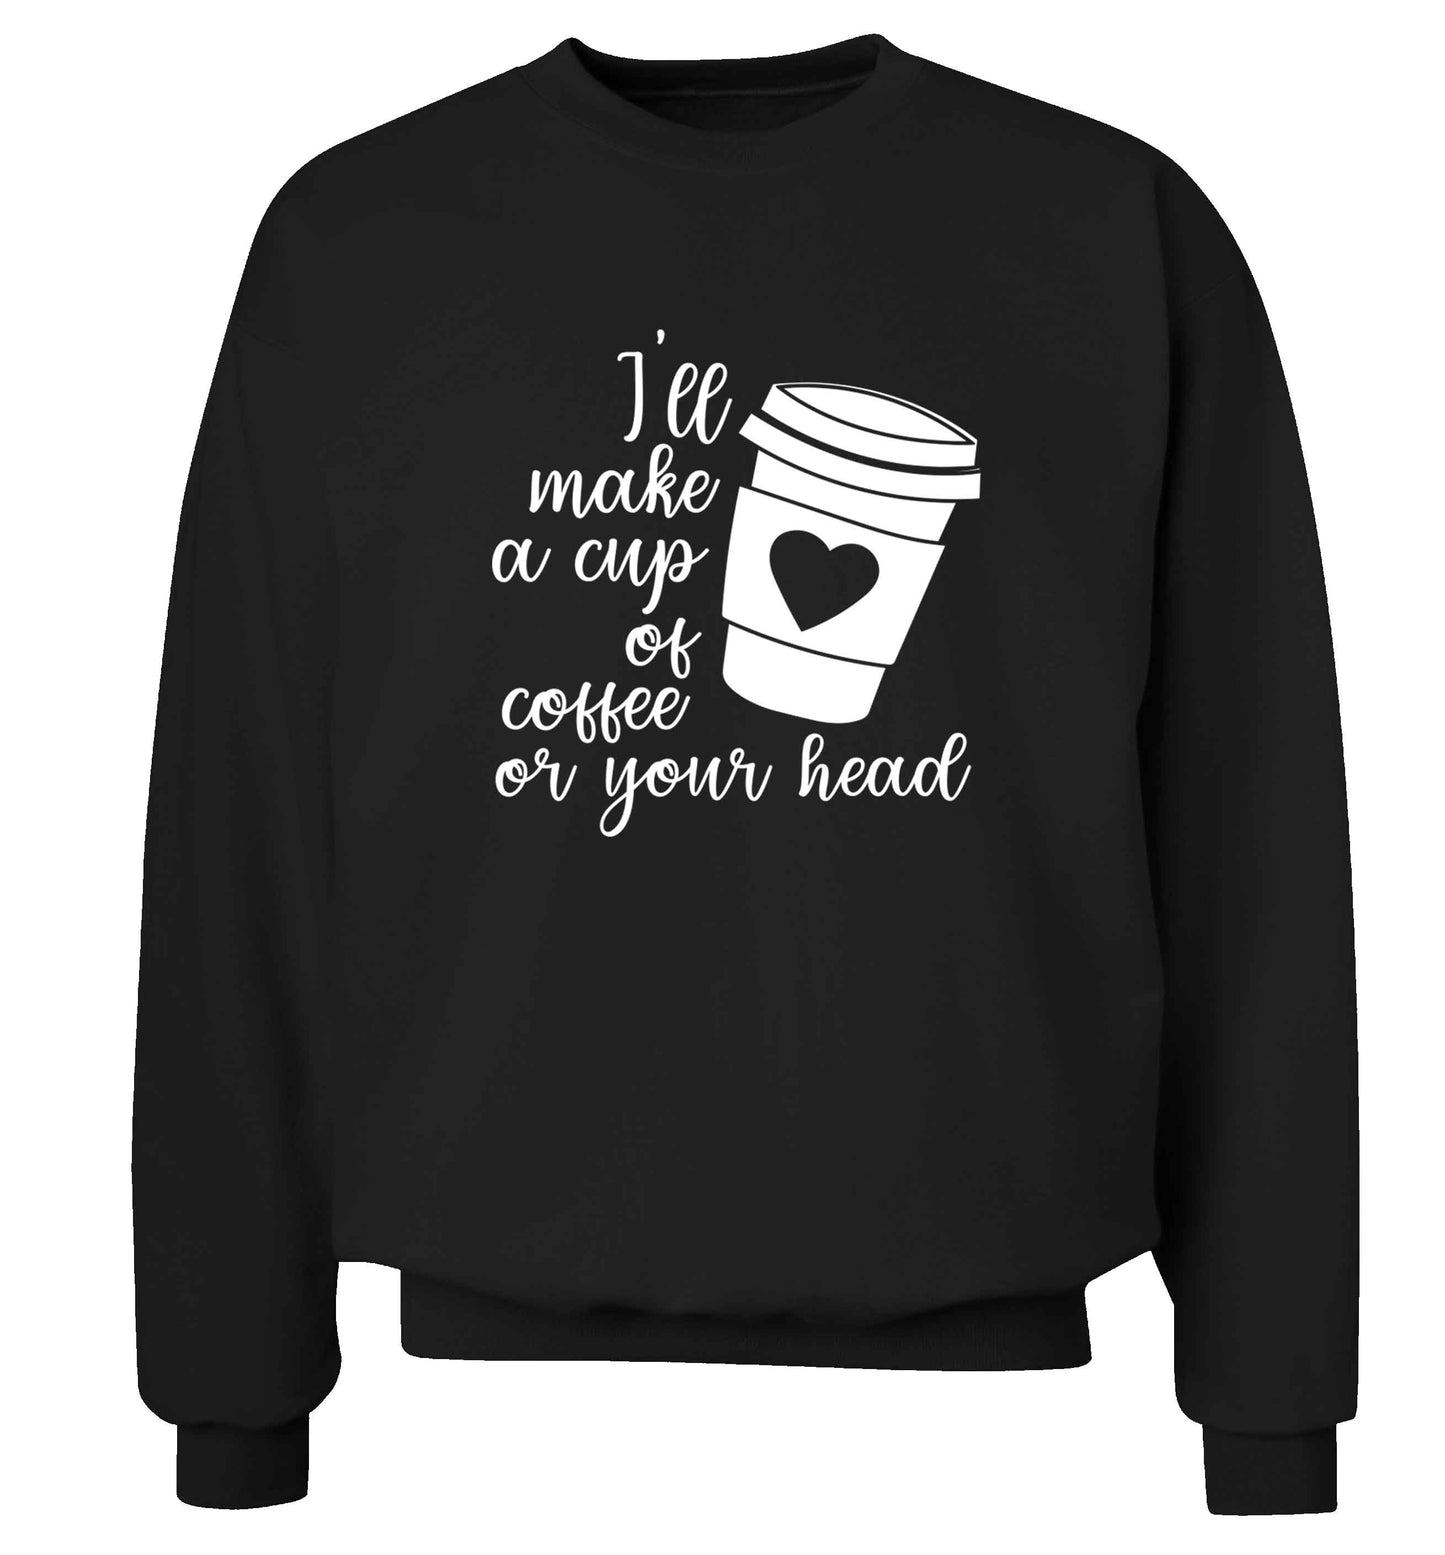 Misheard song lyrics - check!  adult's unisex black sweater 2XL